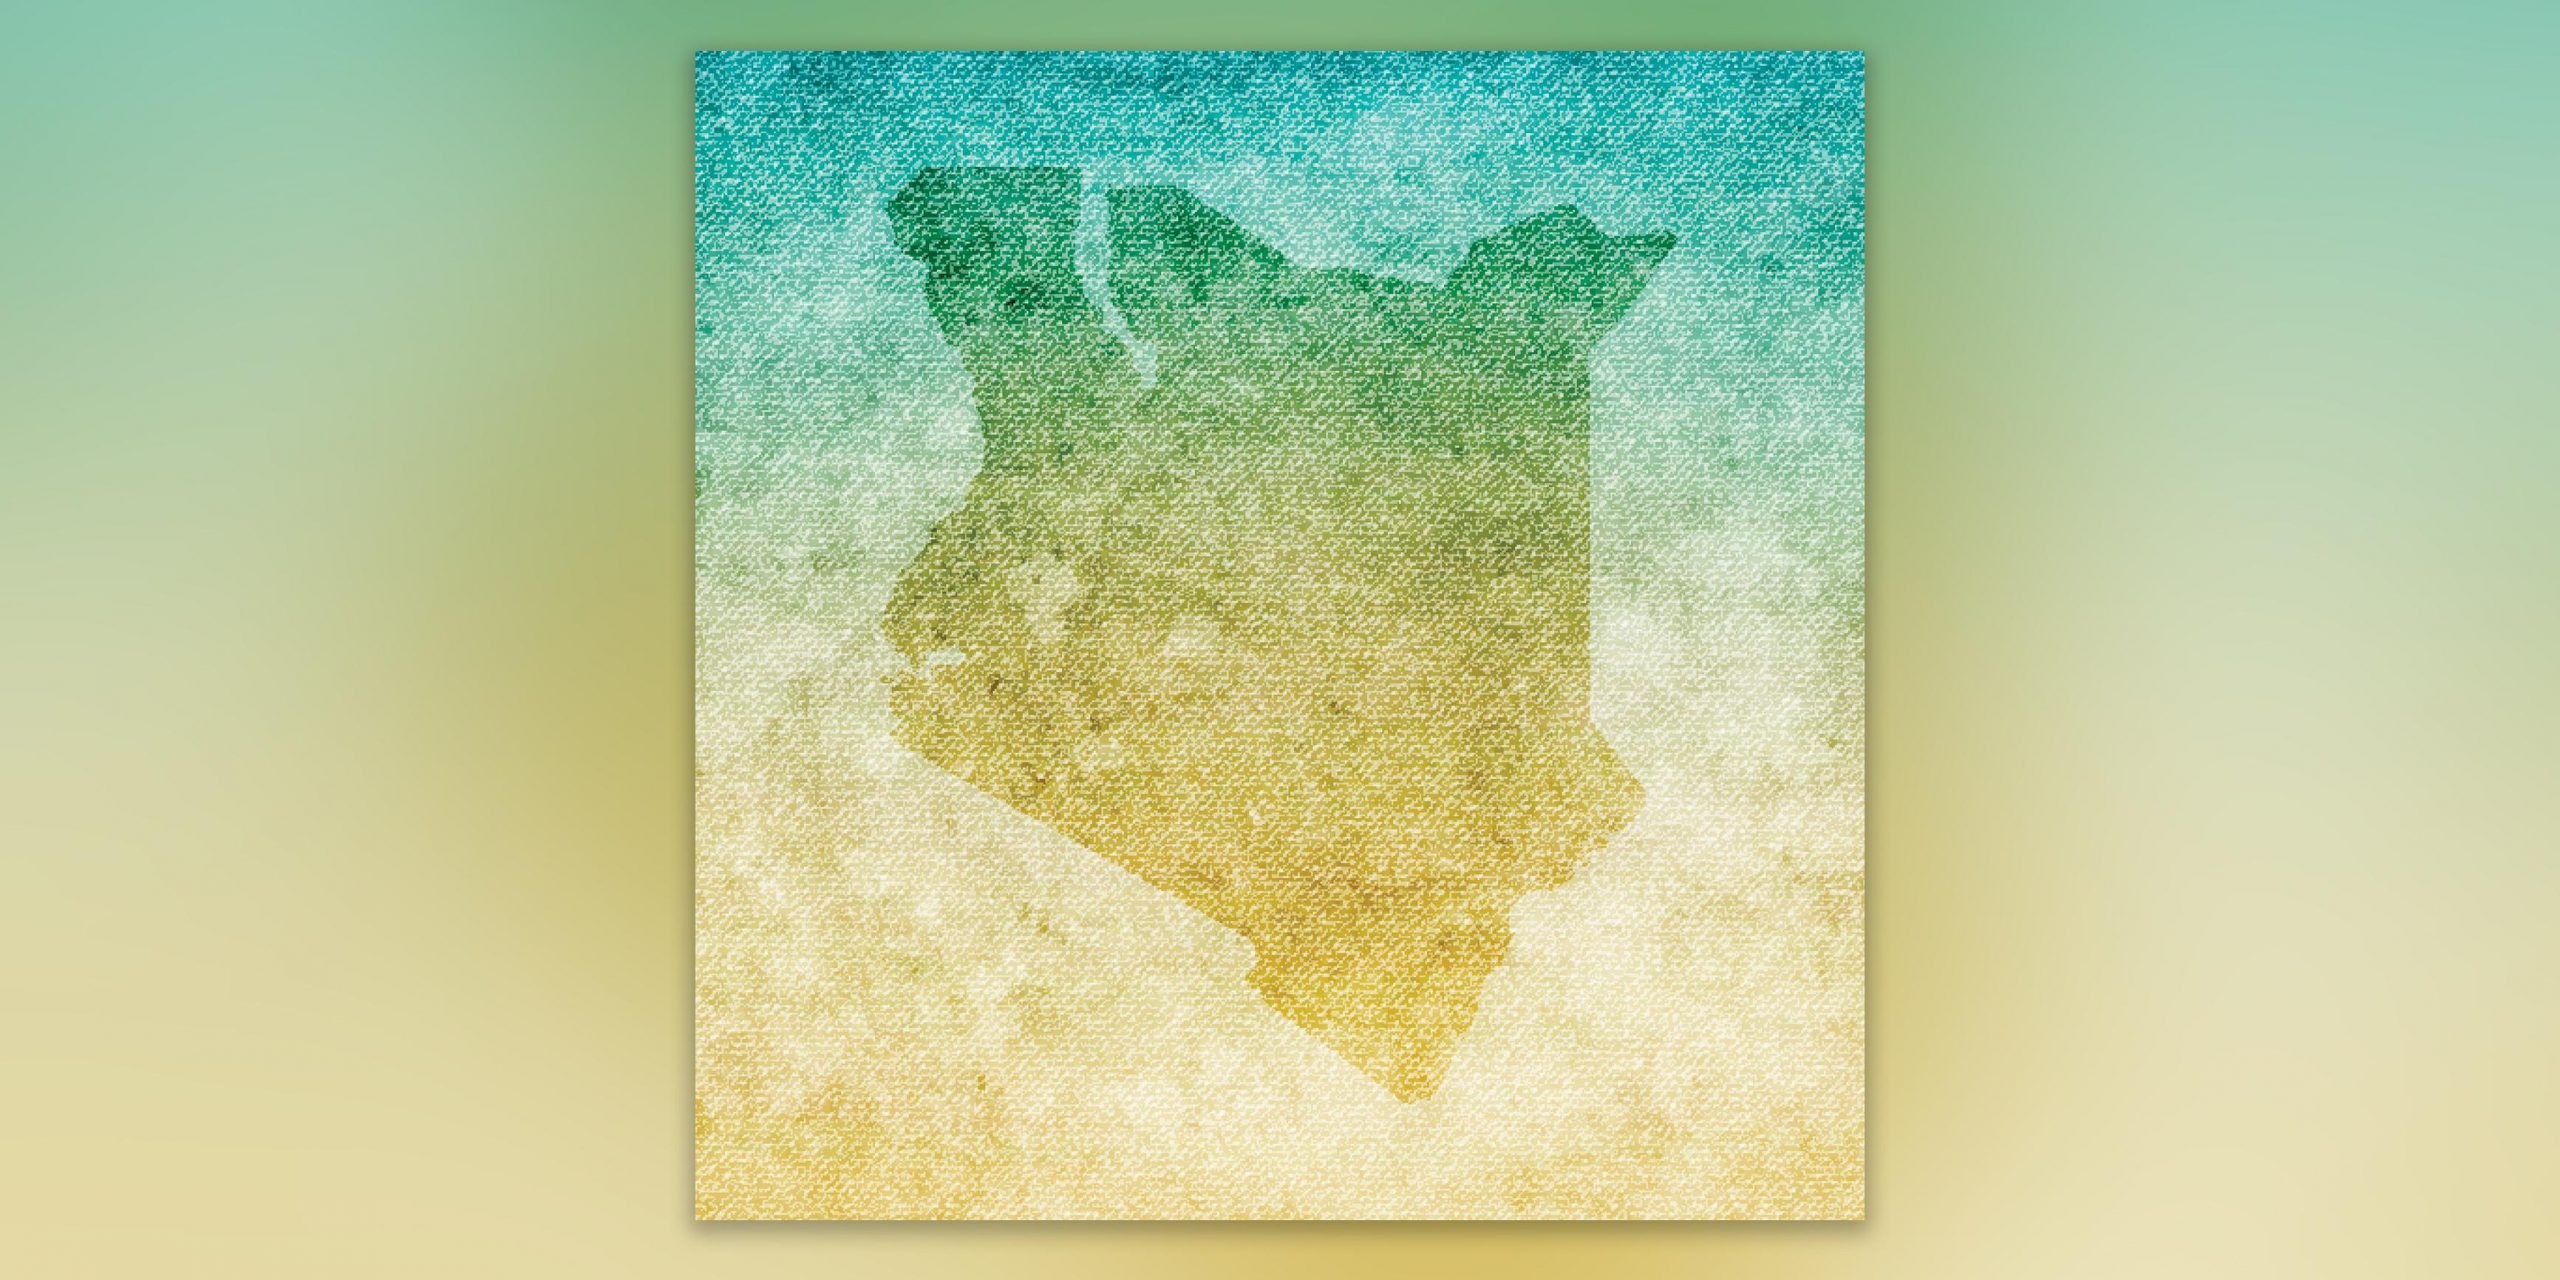 Illustration of Kenya's map